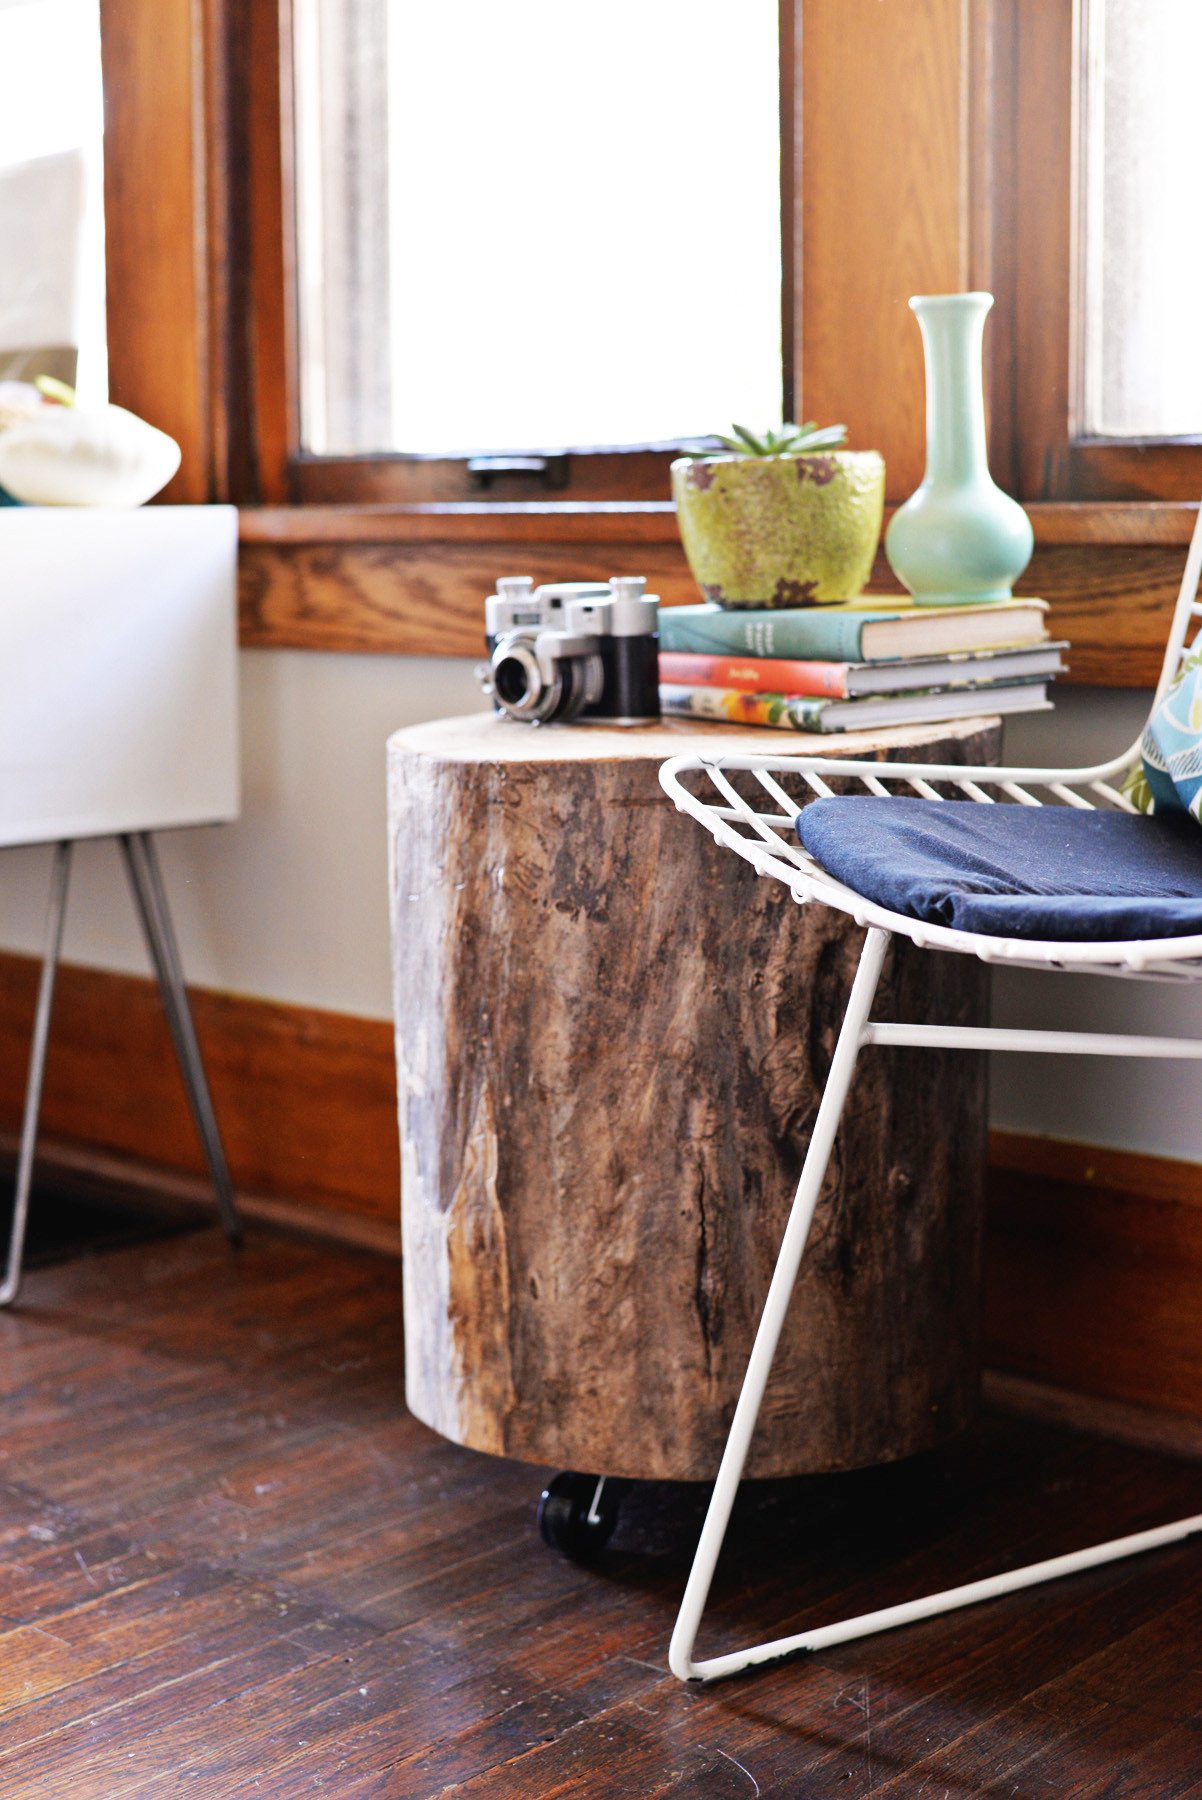 Best ideas about Tree Stump Side Table DIY
. Save or Pin DIY Tree Stump Side Table Now.